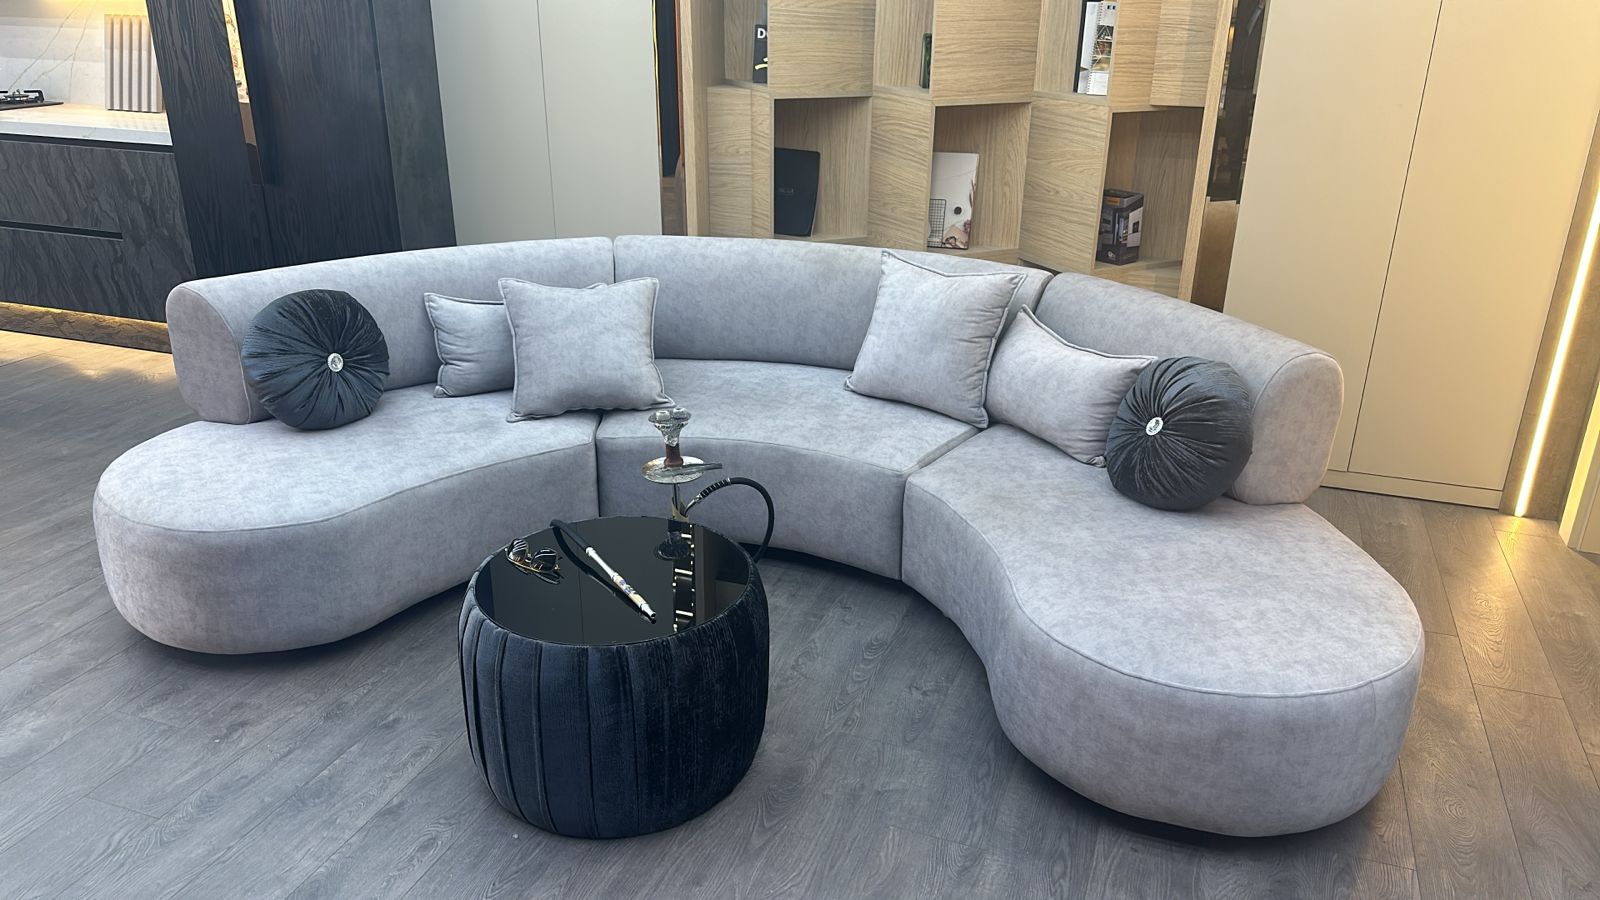 Saral decor - Sofa